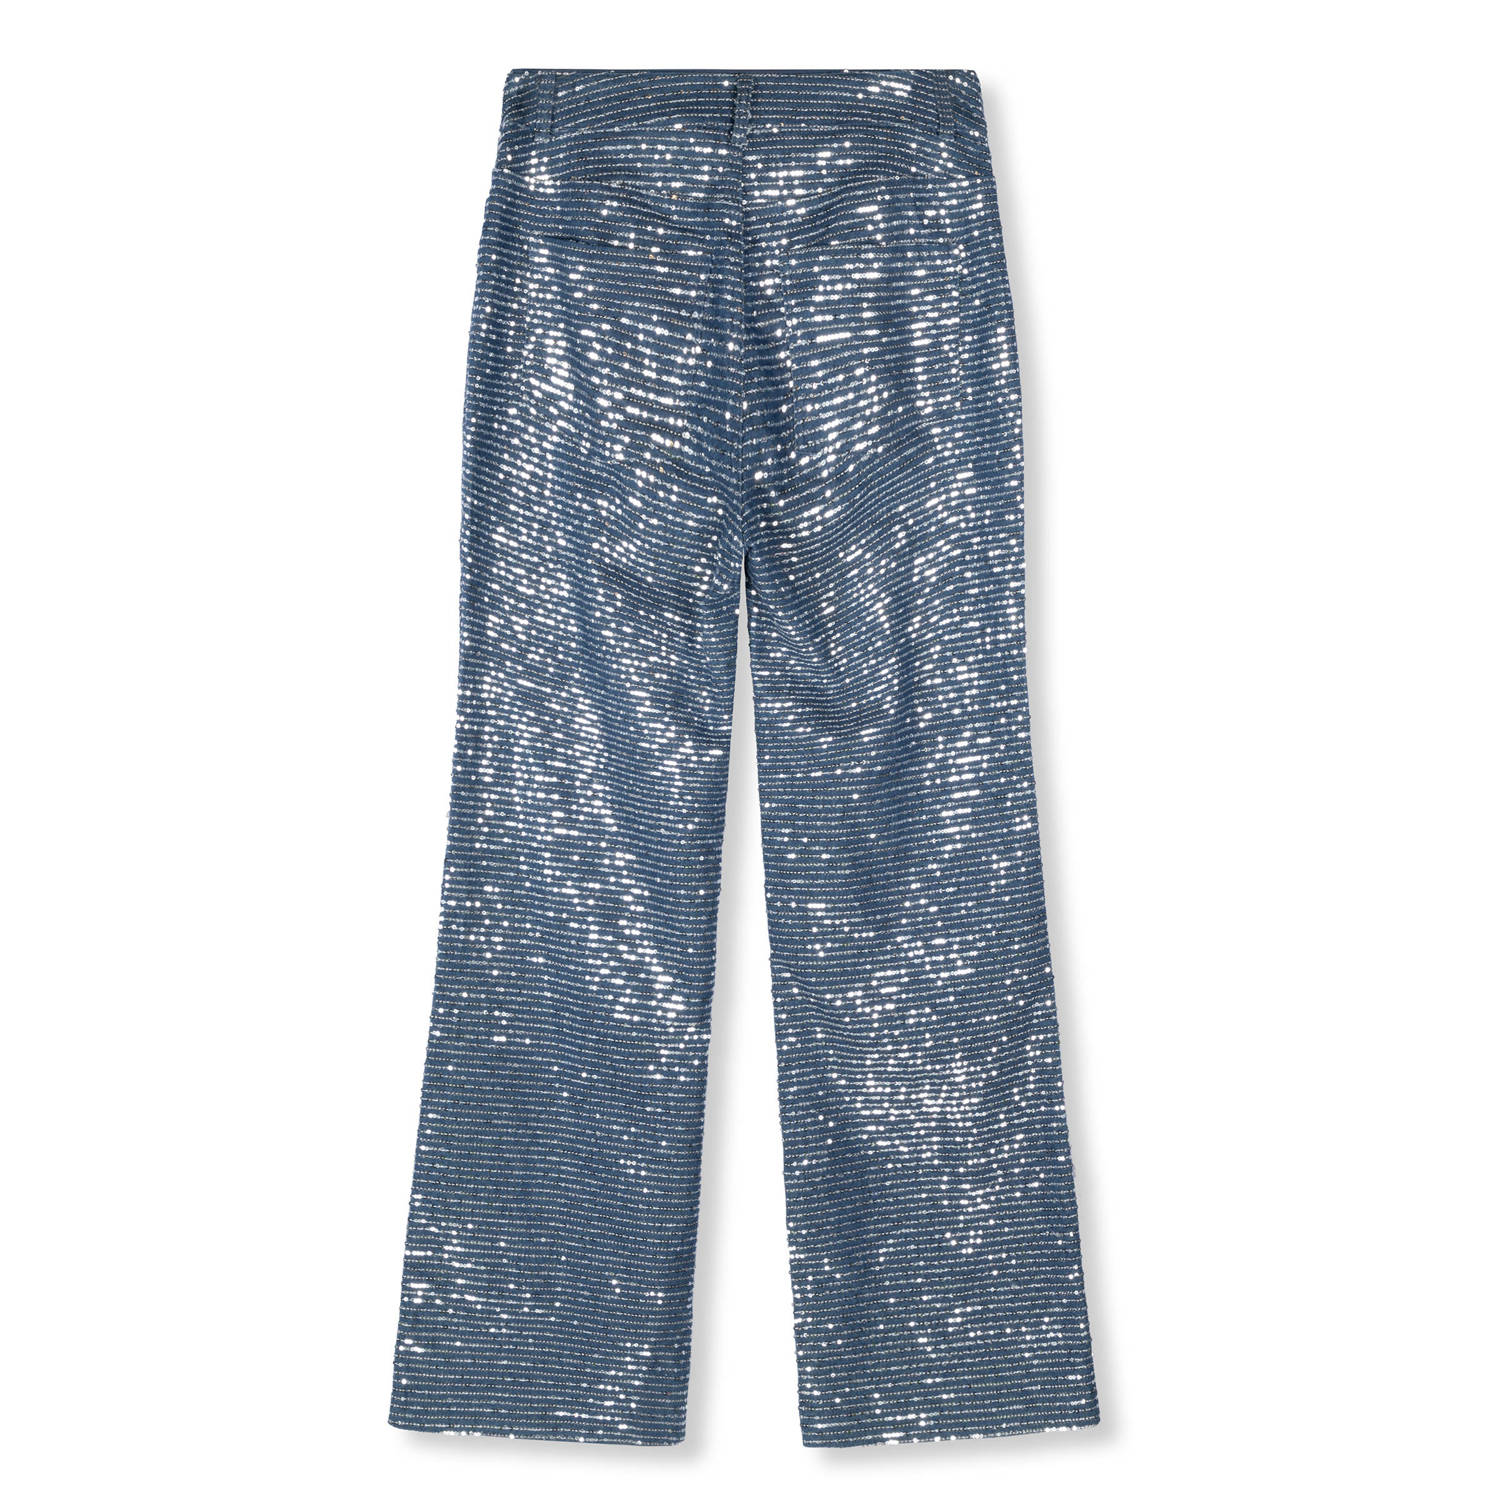 Refined Department metallic high waist straight fit broek Hannah met glitters lichtblauw zilver